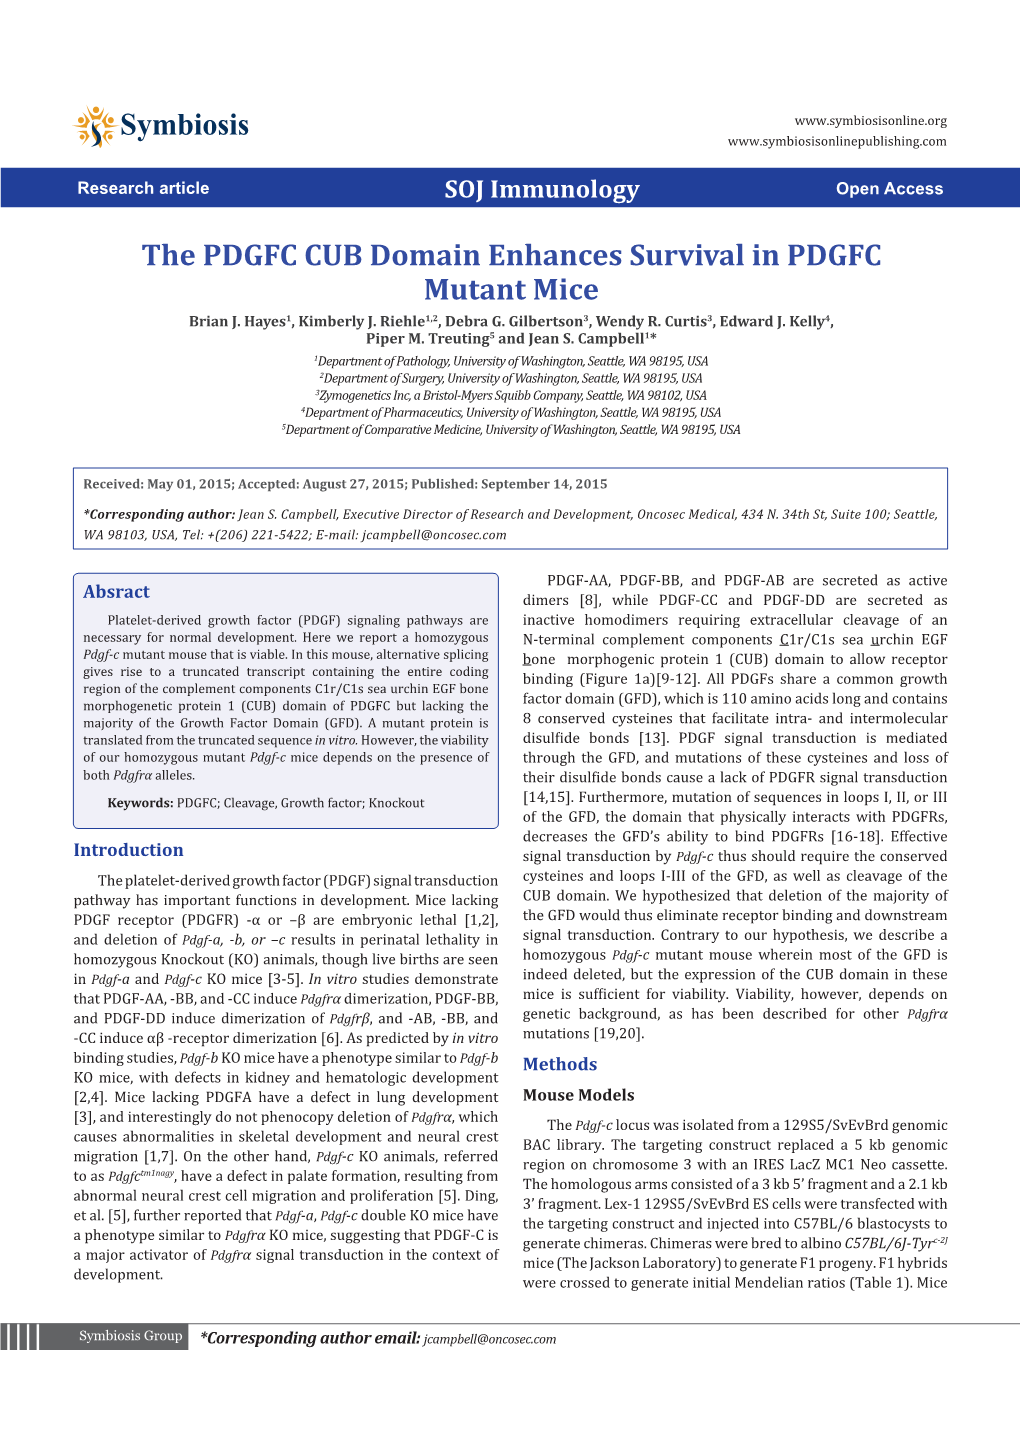 The PDGFC CUB Domain Enhances Survival in PDGFC Mutant Mice Brian J